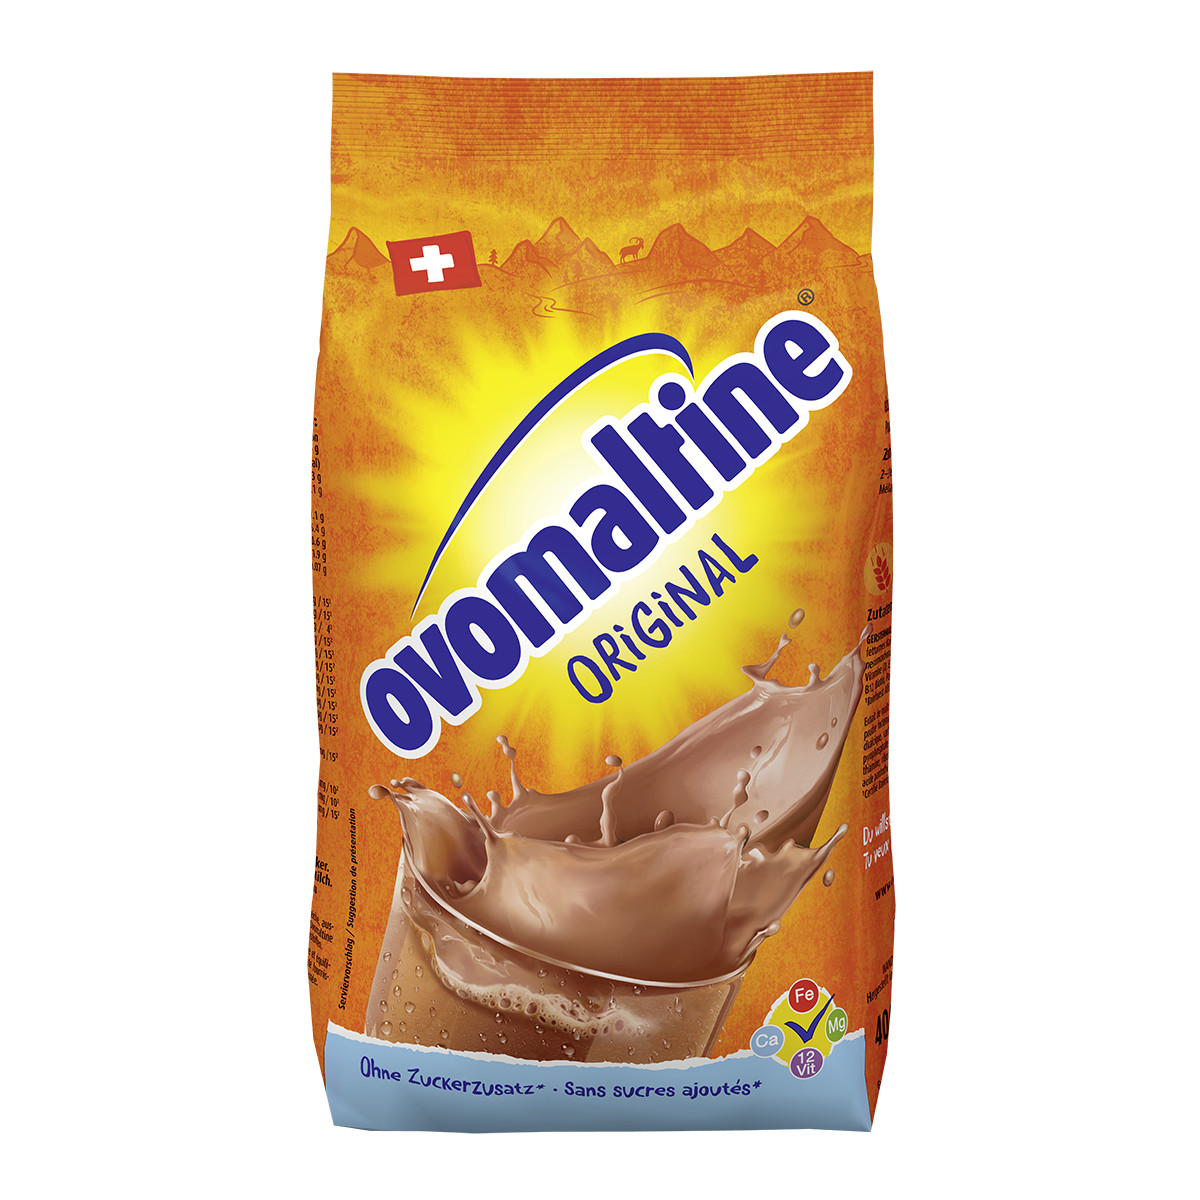  Poudre Ovomaltine - poudre chocolatée